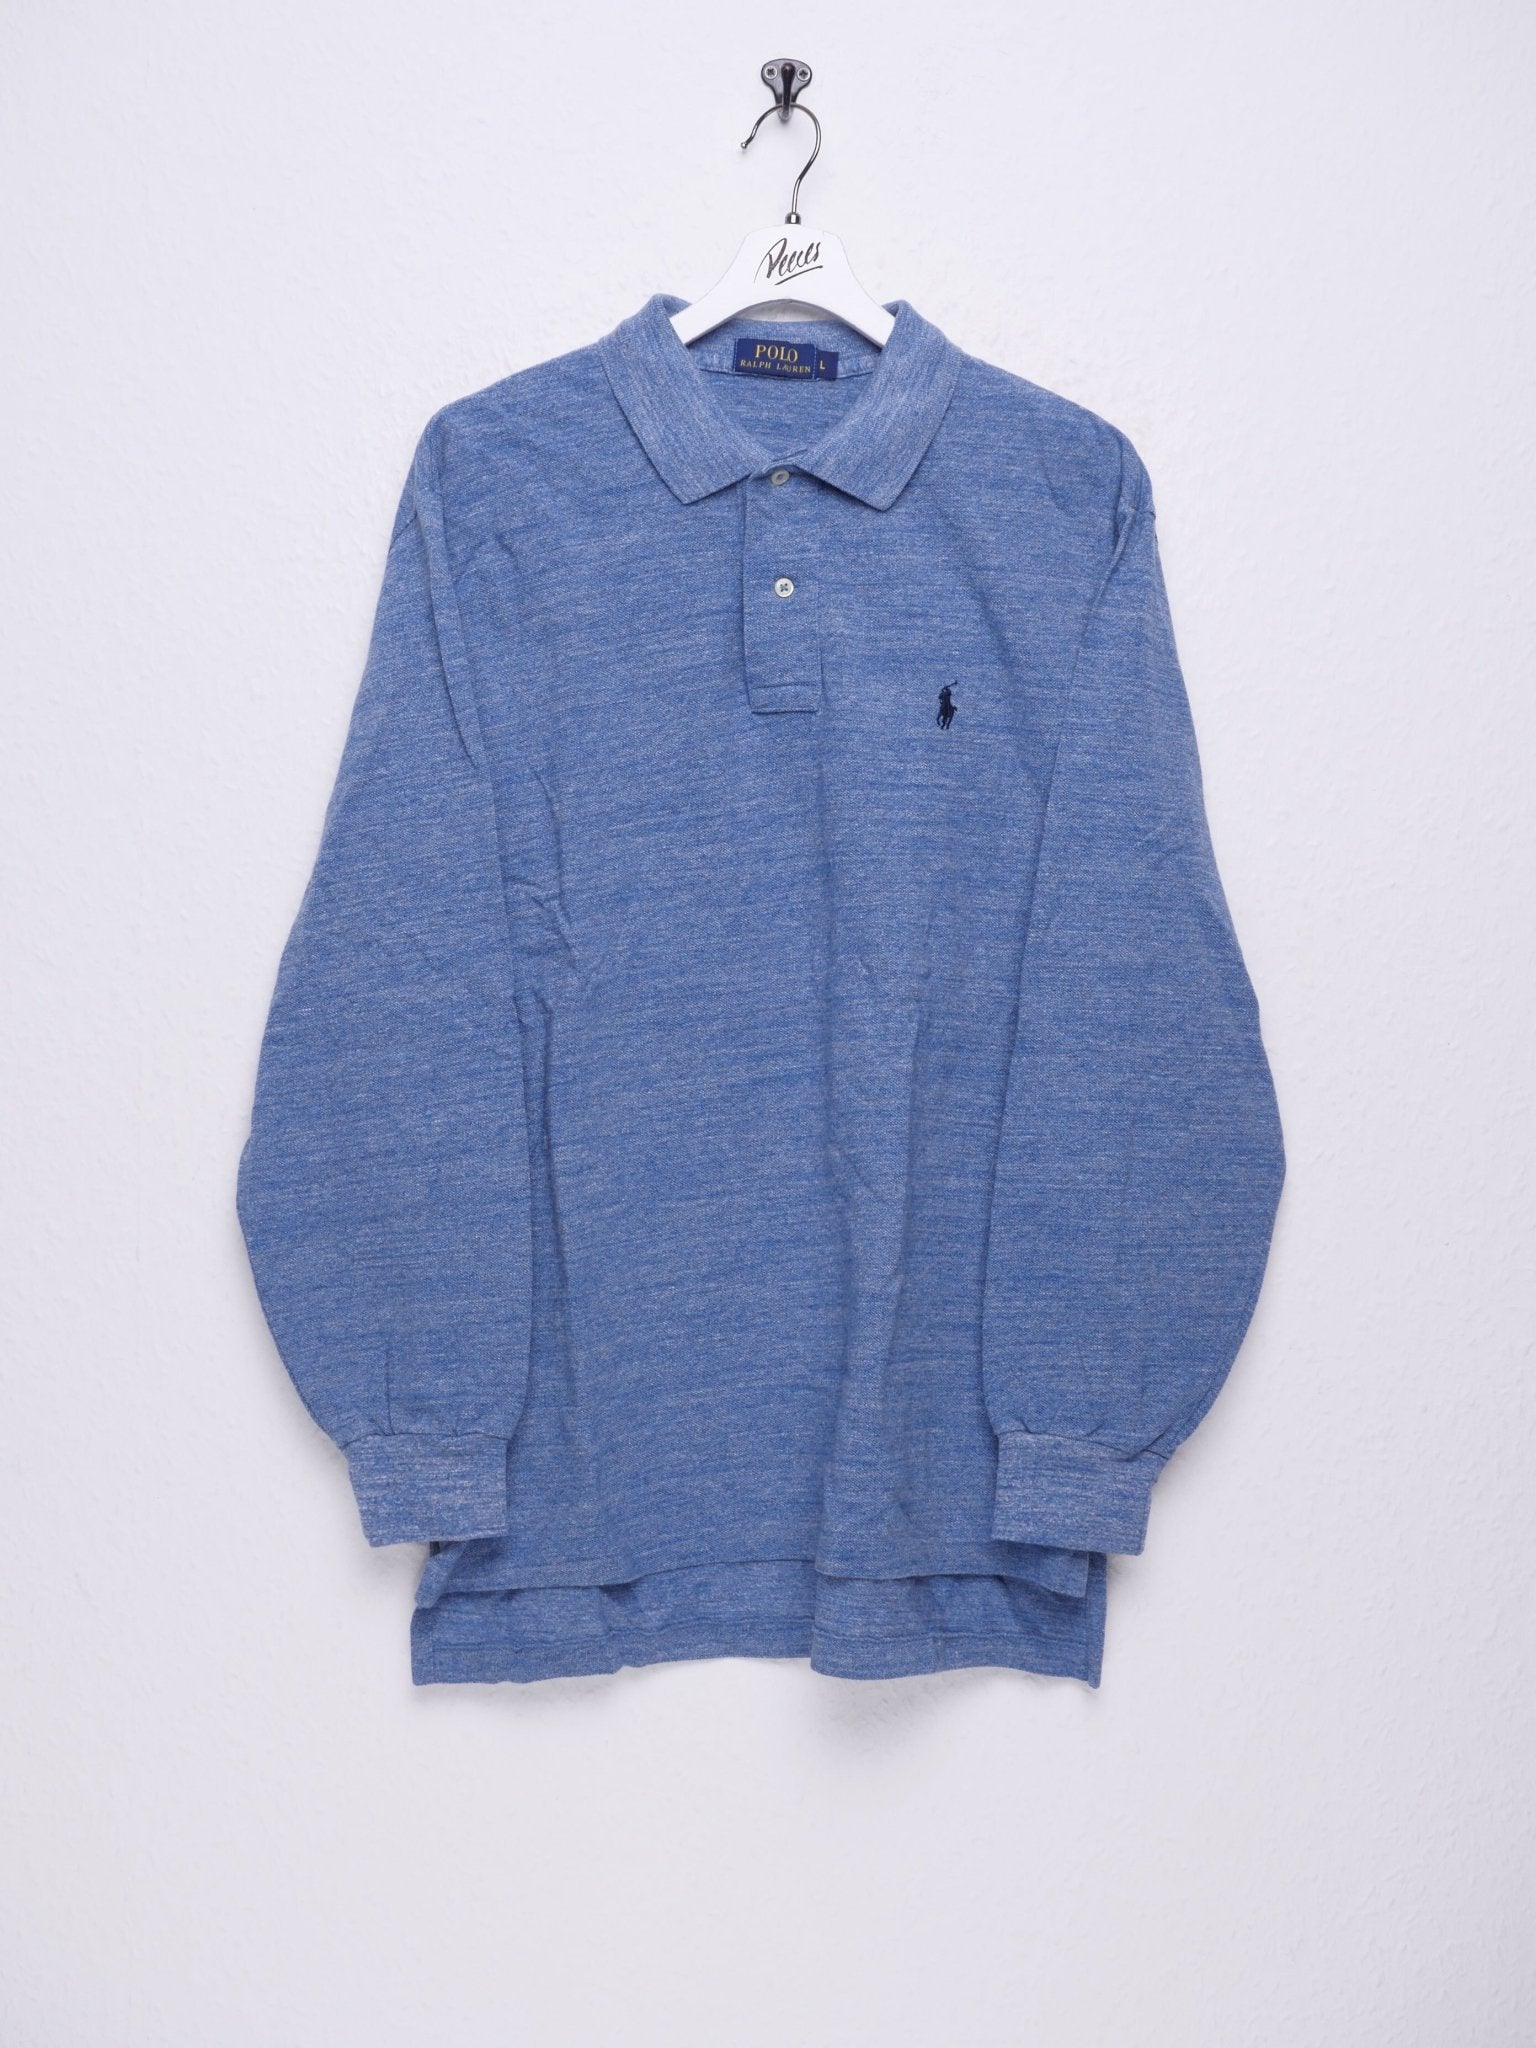 Polo Ralph Lauren embroidered Logo blue L/S Polo Shirt - Peeces